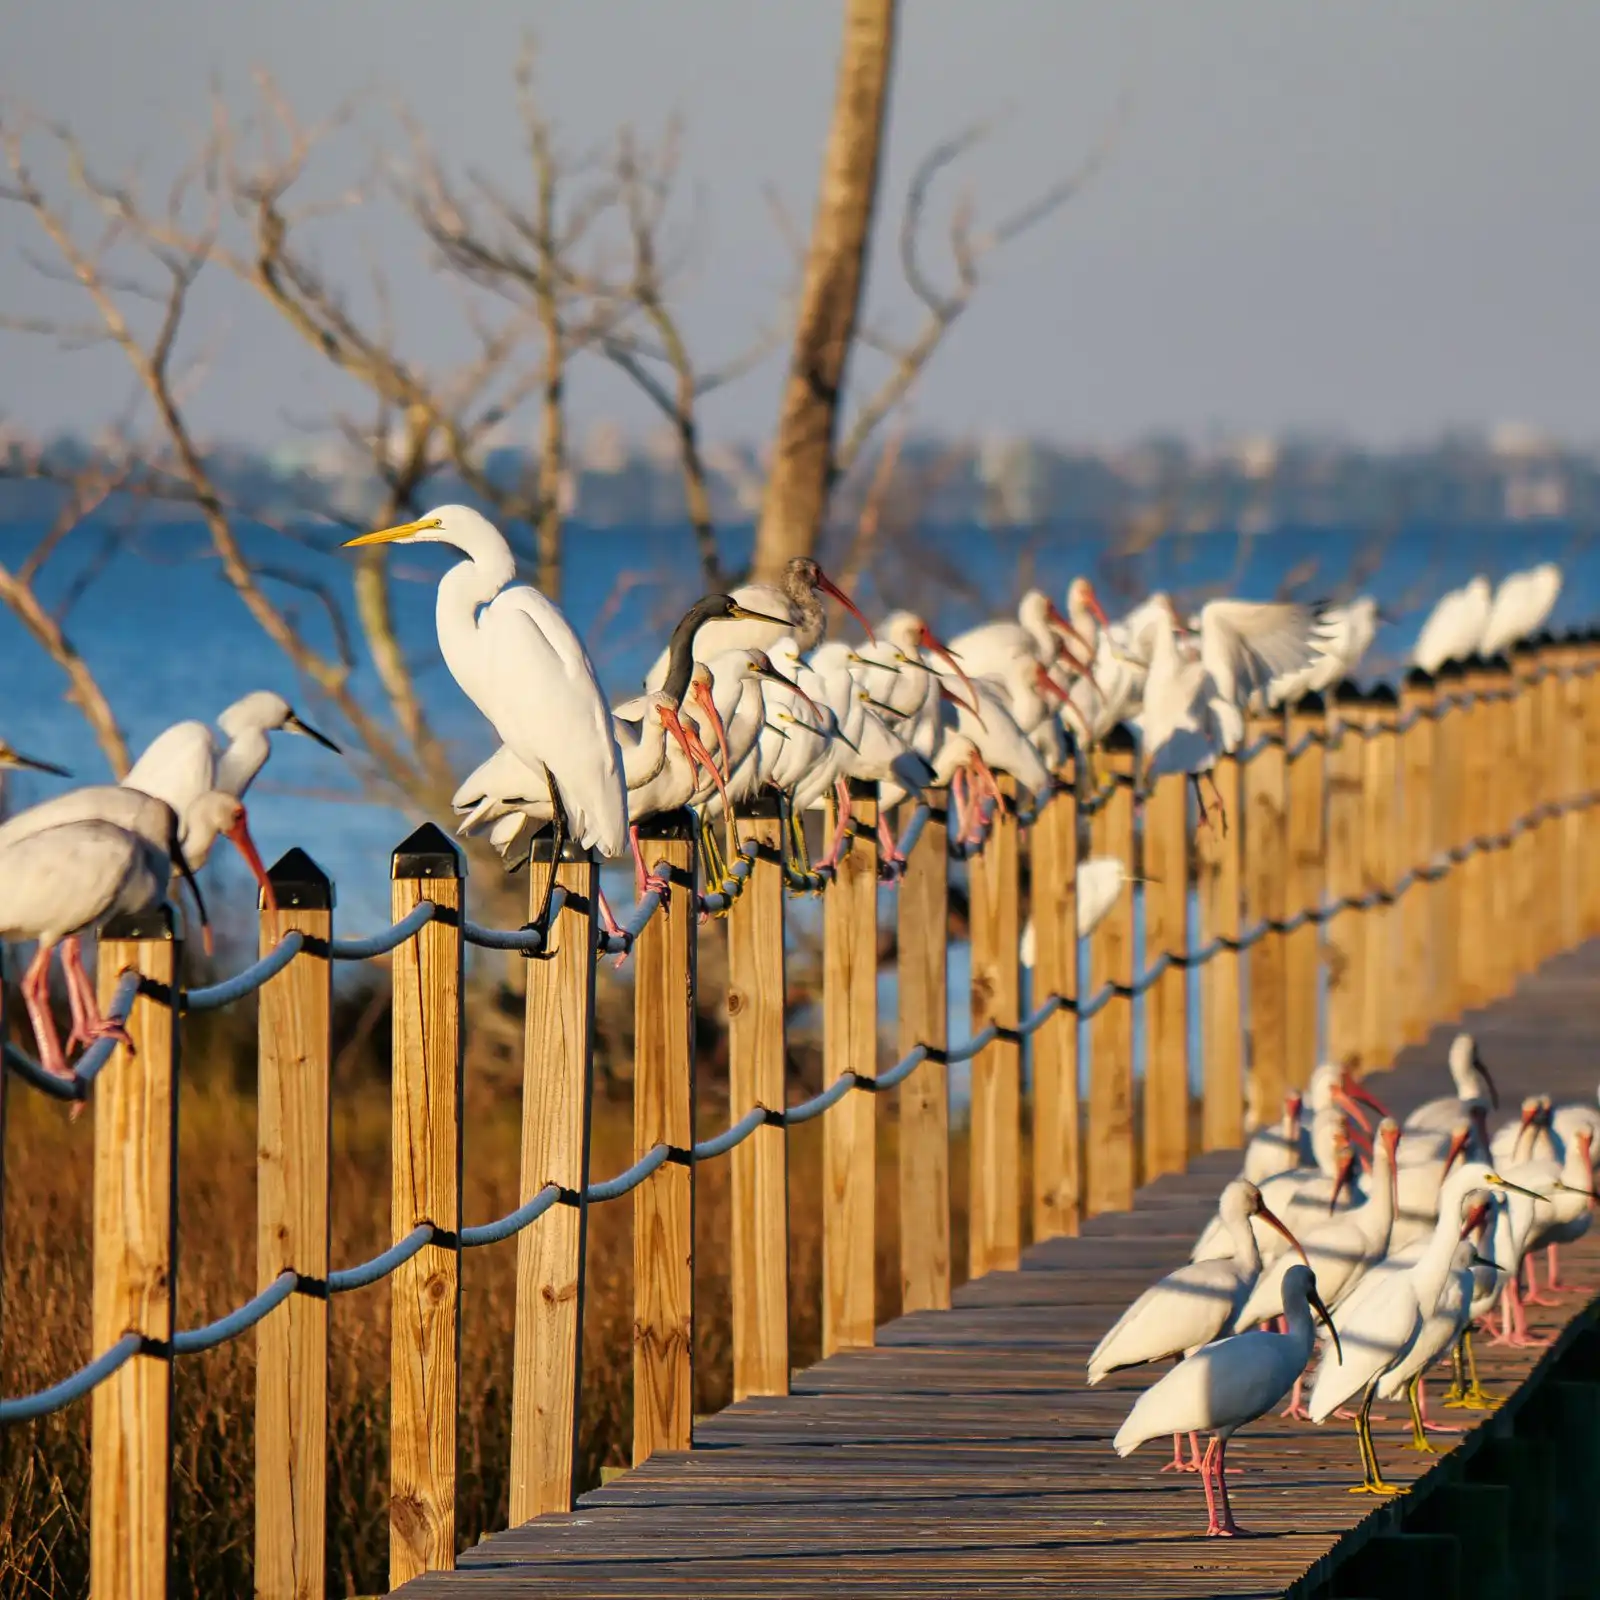 Birds flock lands on pier